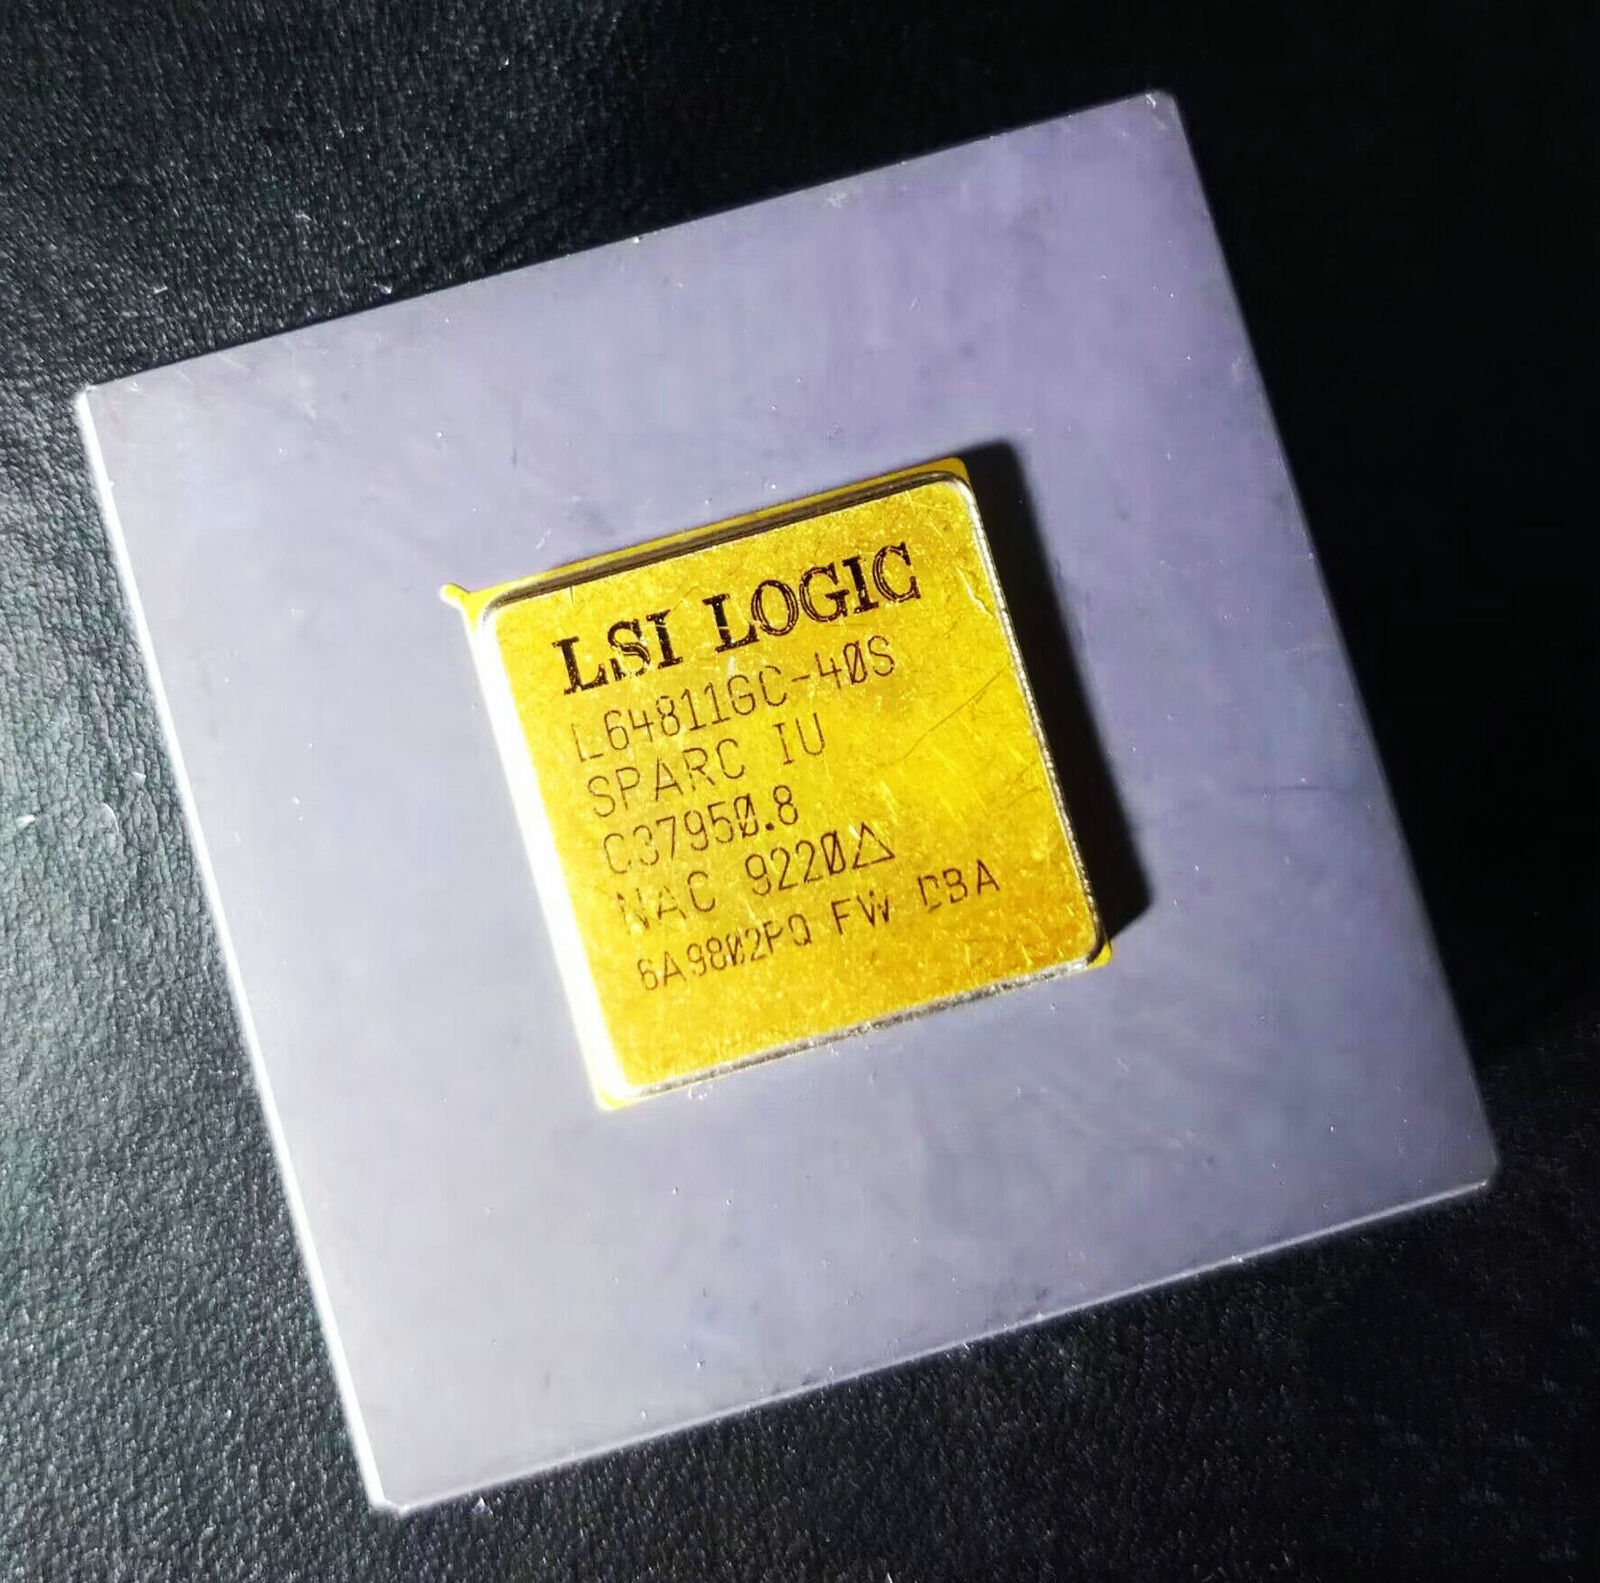 LSI LOGIC SPARC IU L64811GC-40S 40MHz CPU High Collection Value